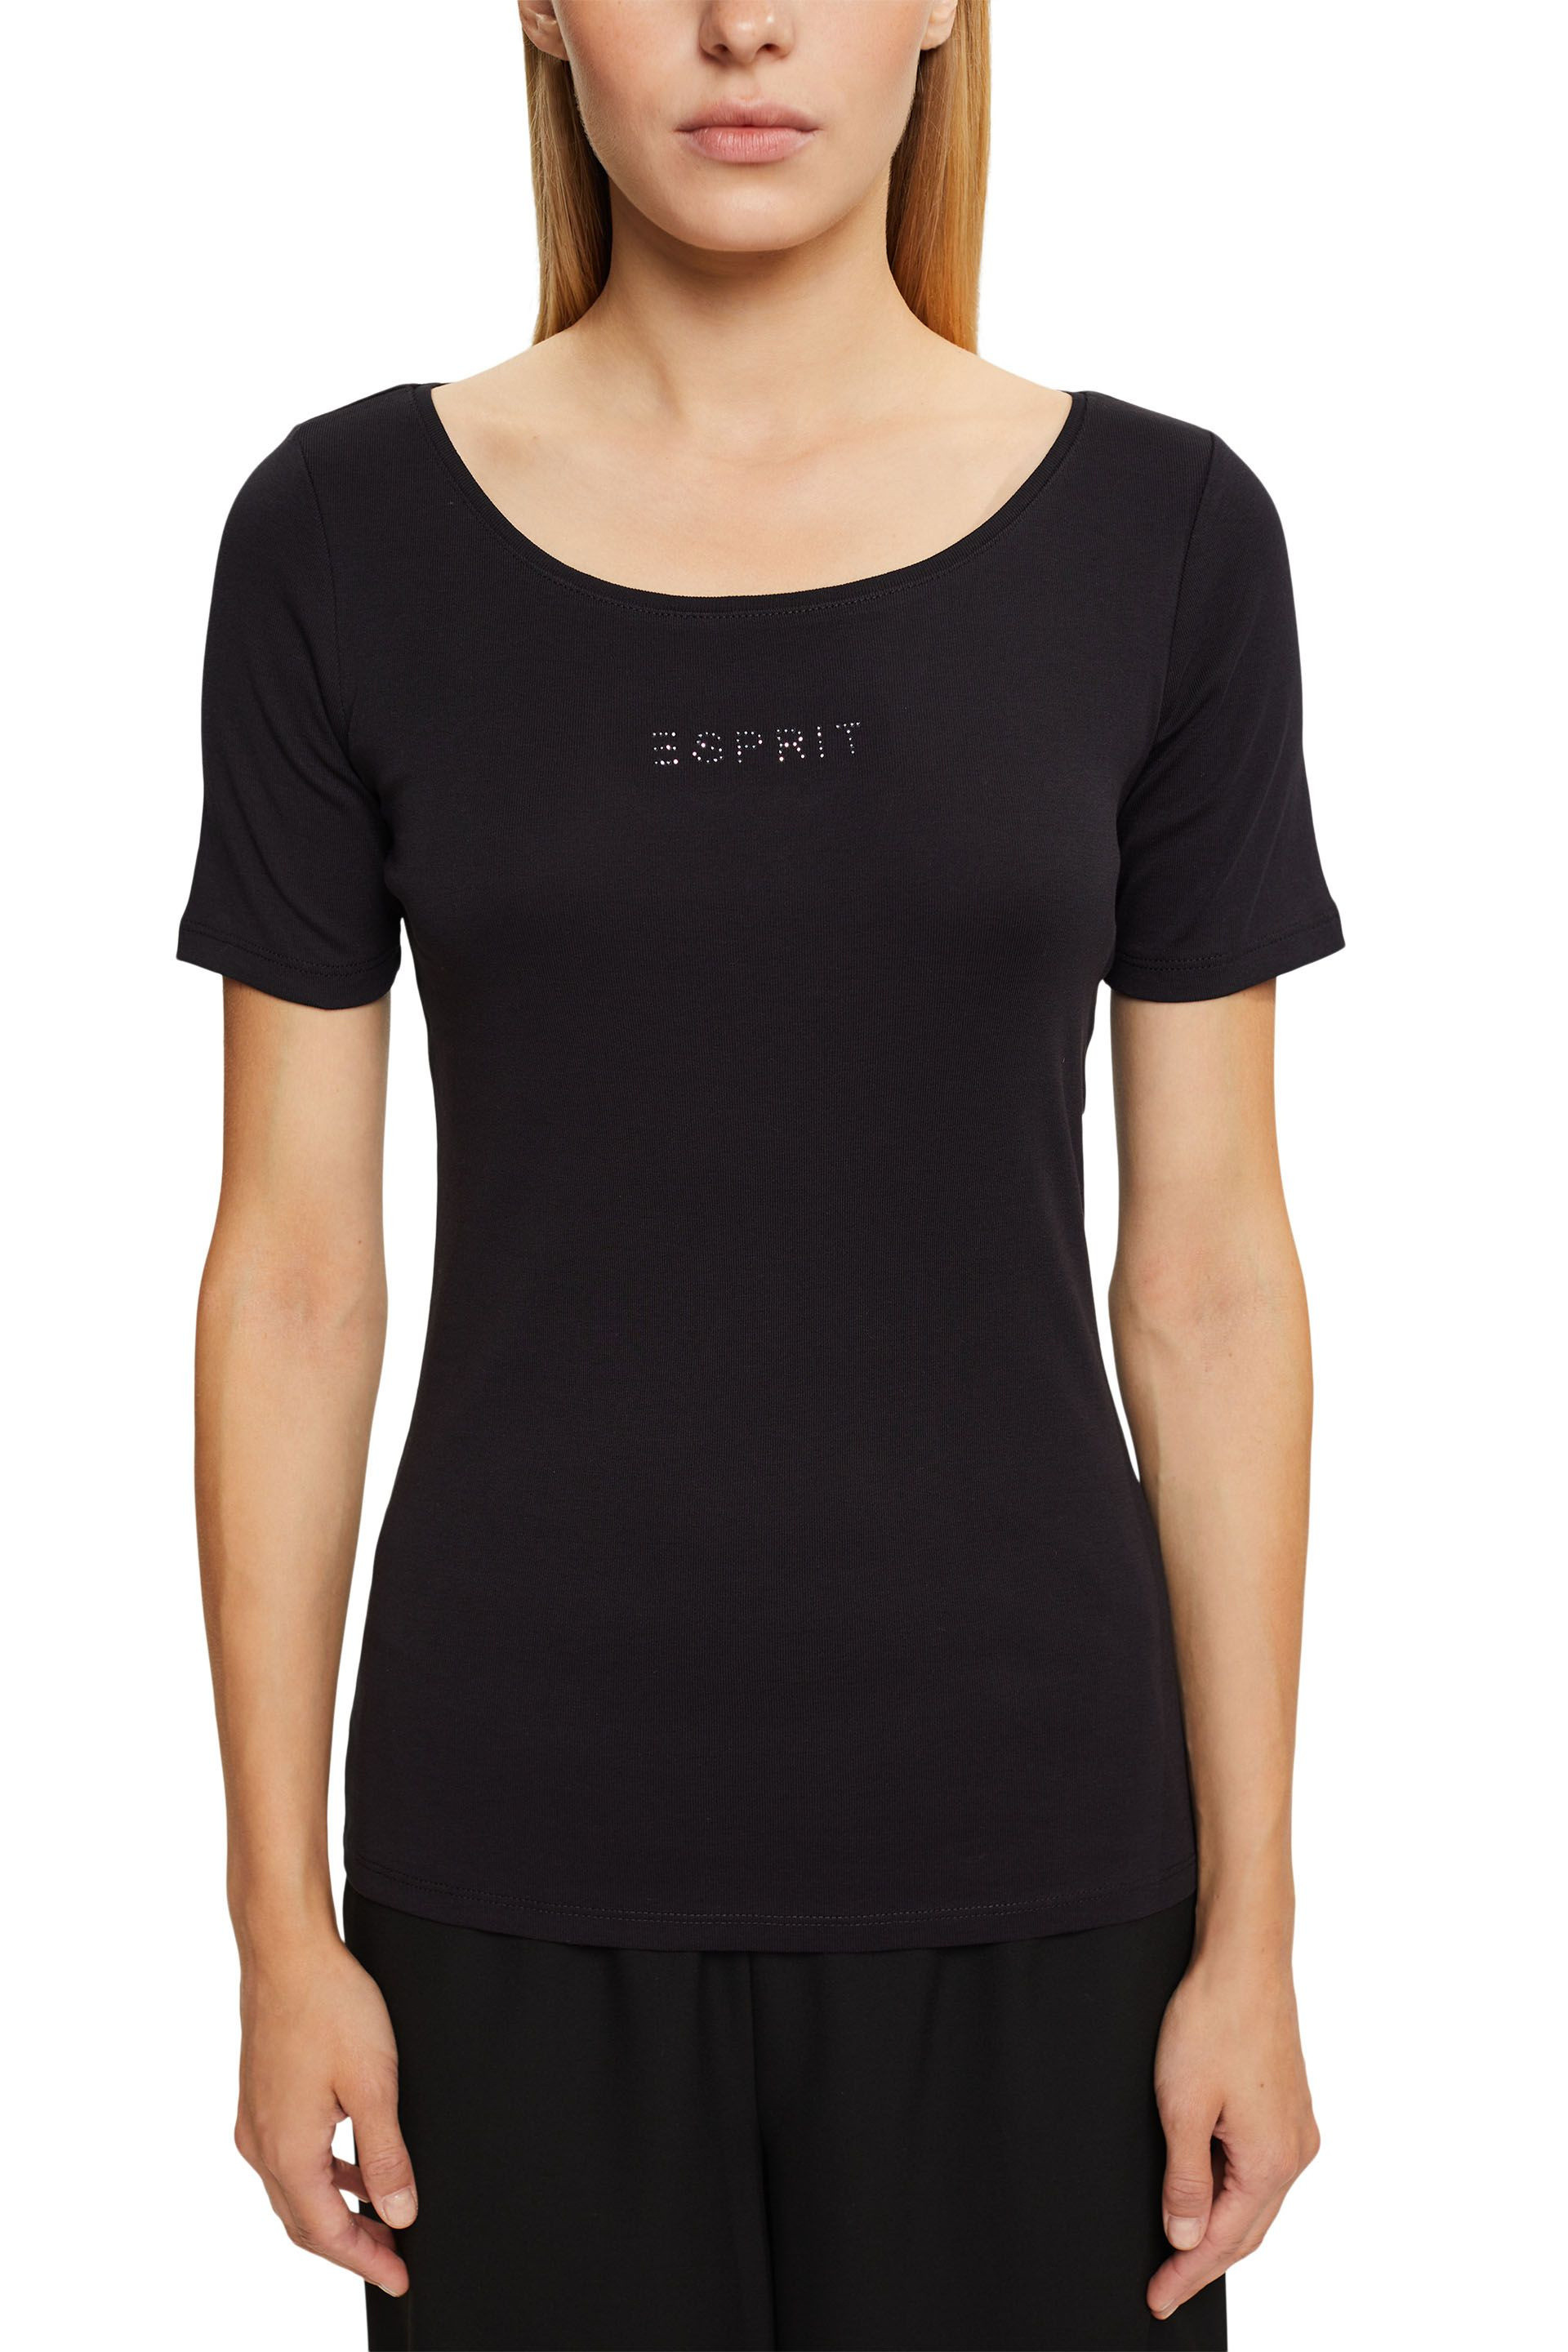 Esprit - Cotton logo T-shirt, Black, large image number 1